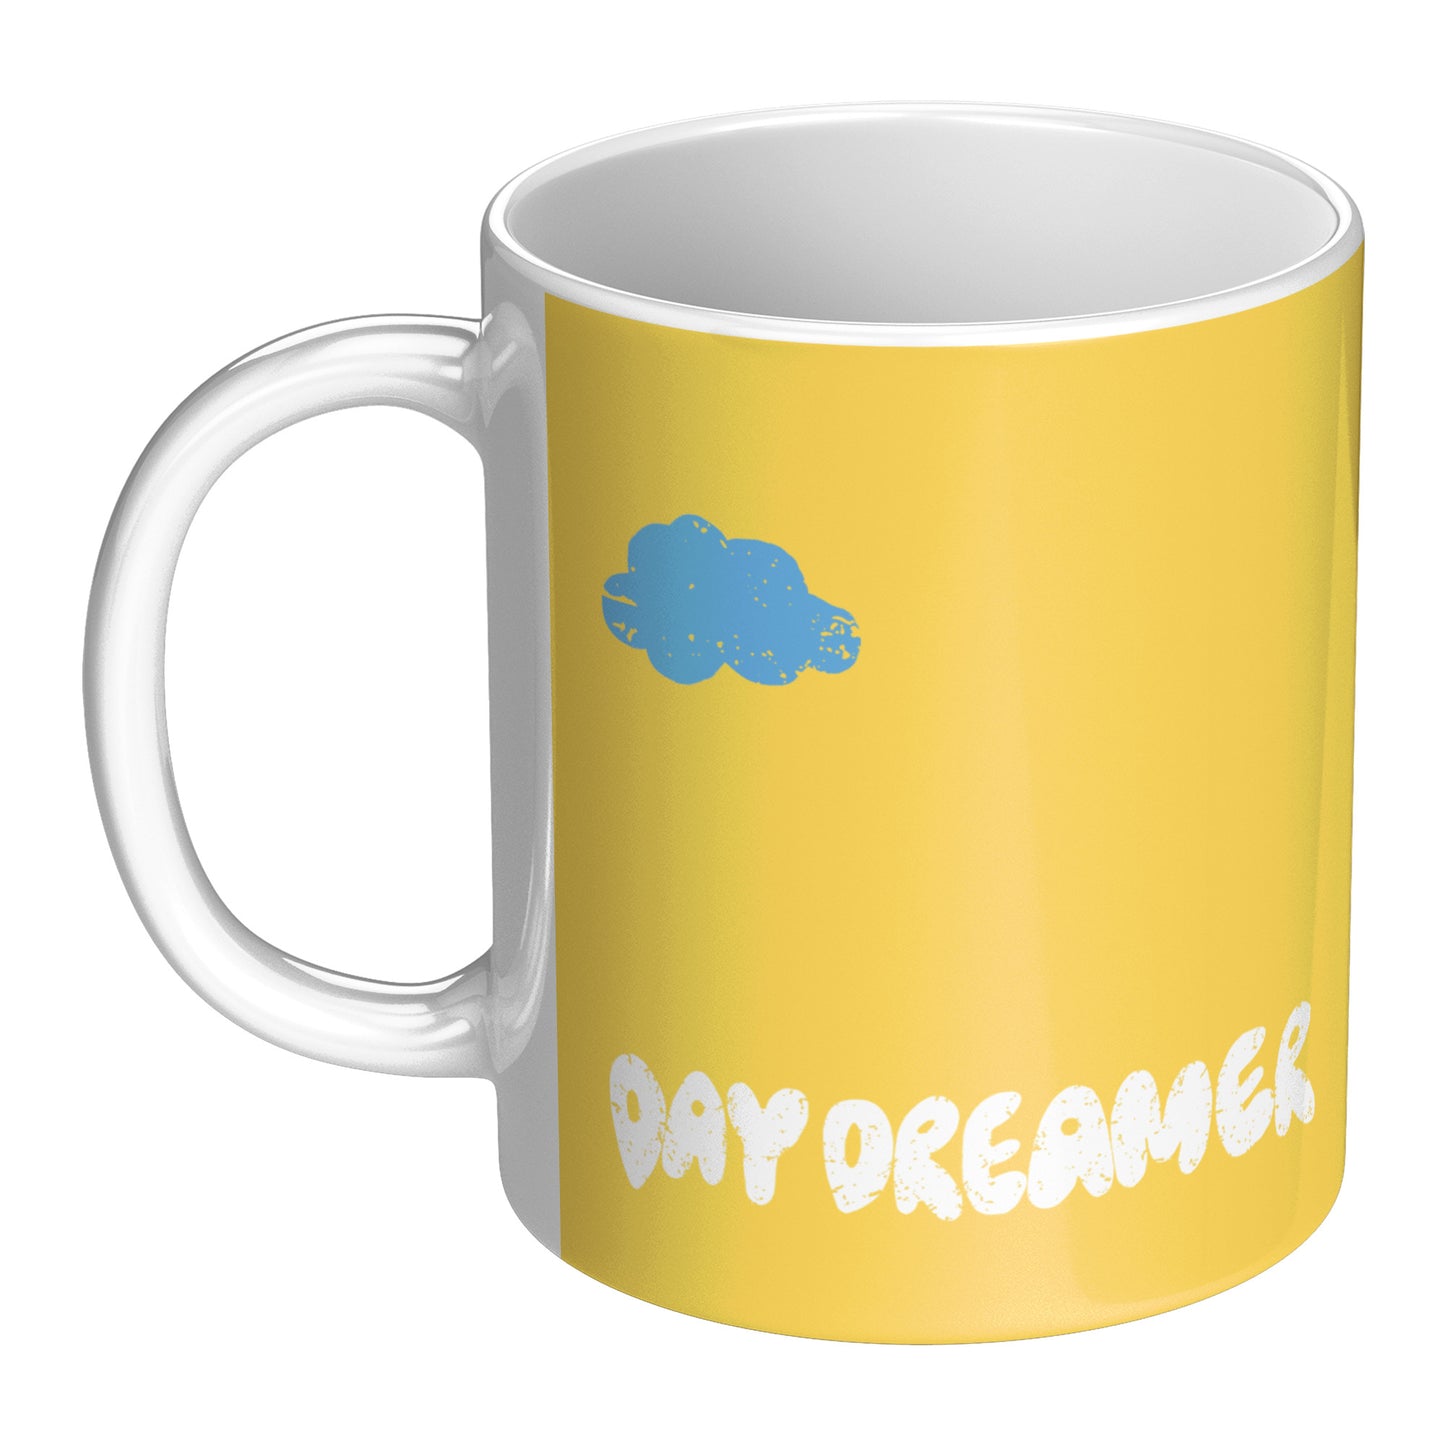 The Day Dreamer Mug in Yellow